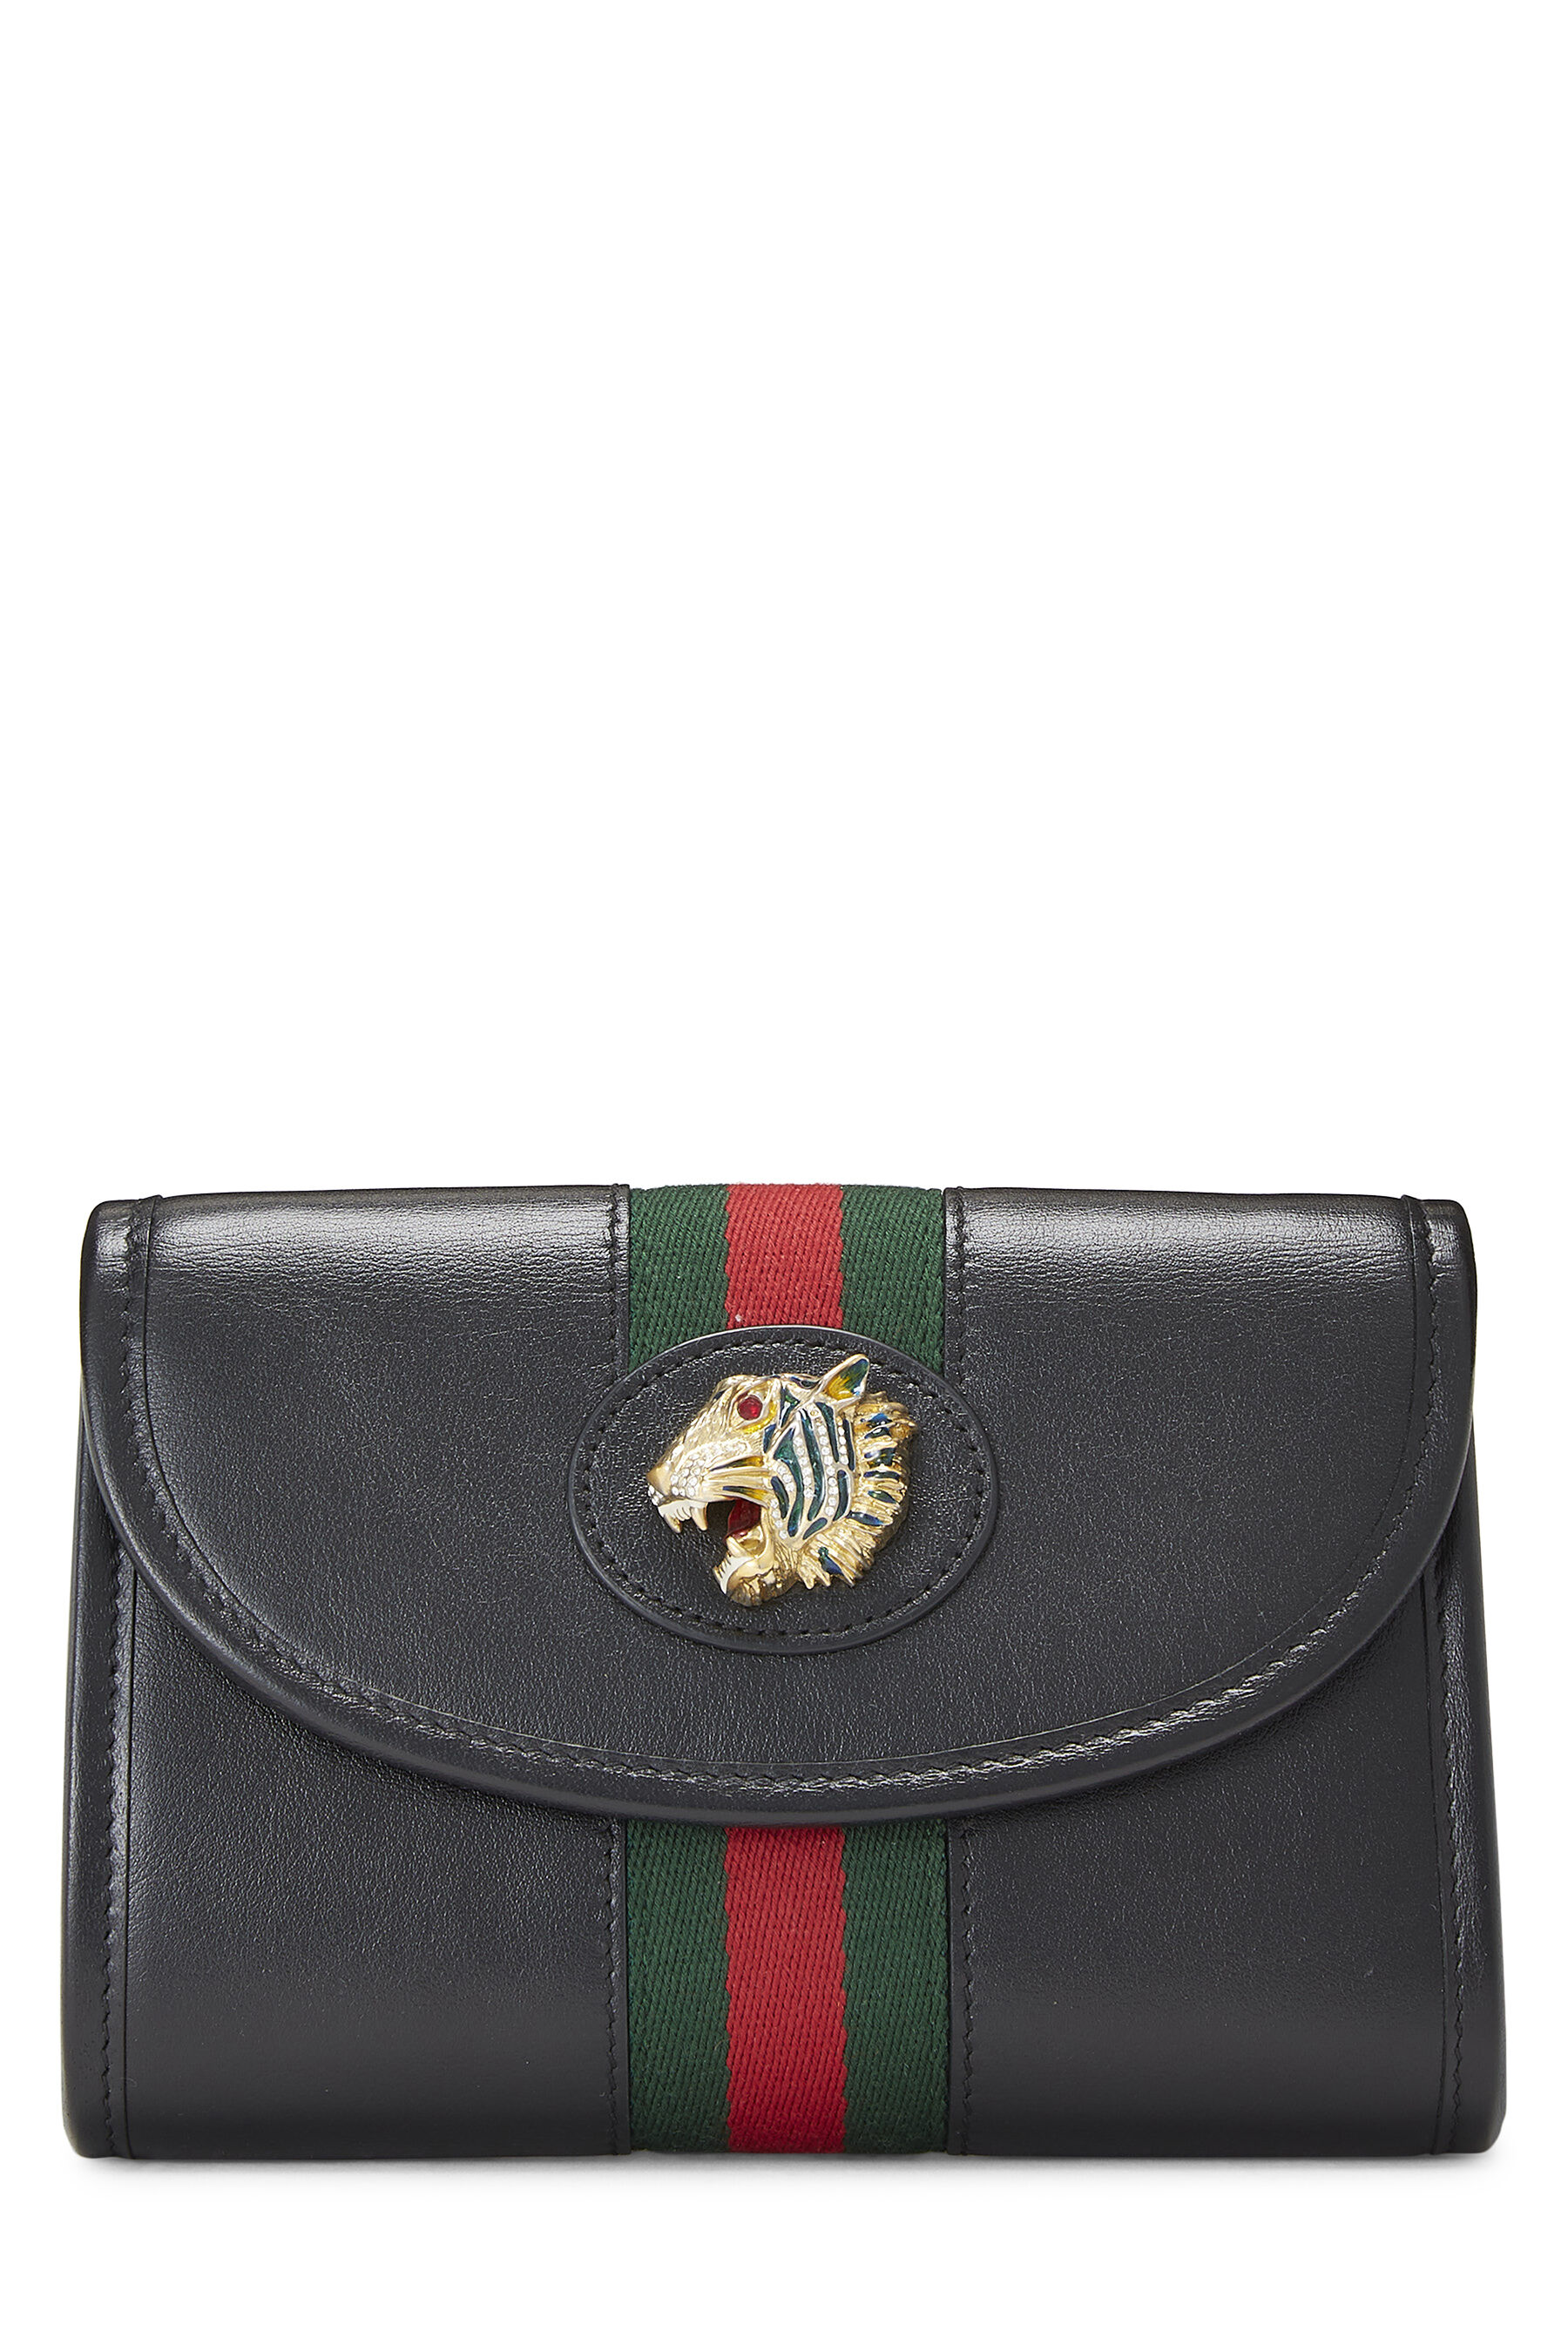 Gucci Black Leather Web Rajah Shoulder Bag Mini